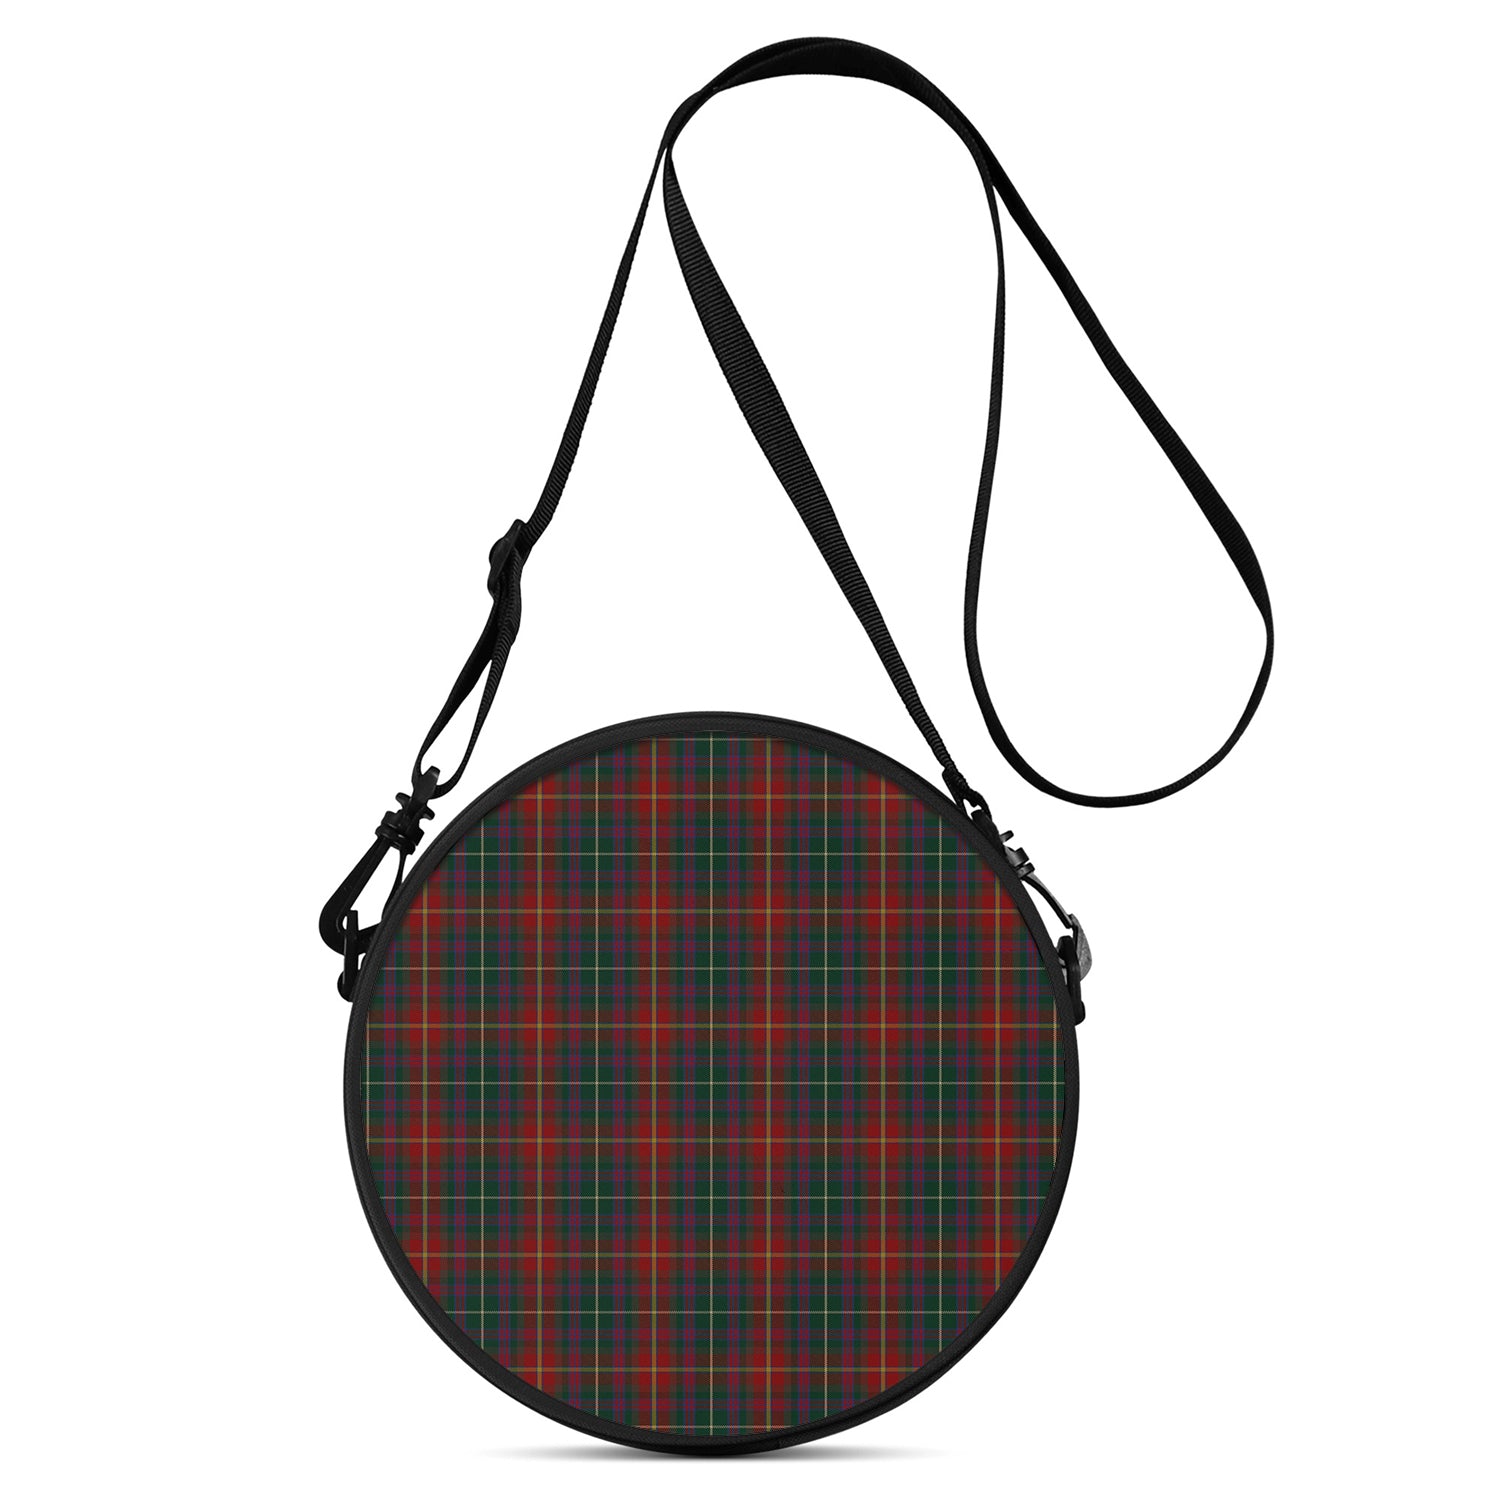 meath-tartan-round-satchel-bags